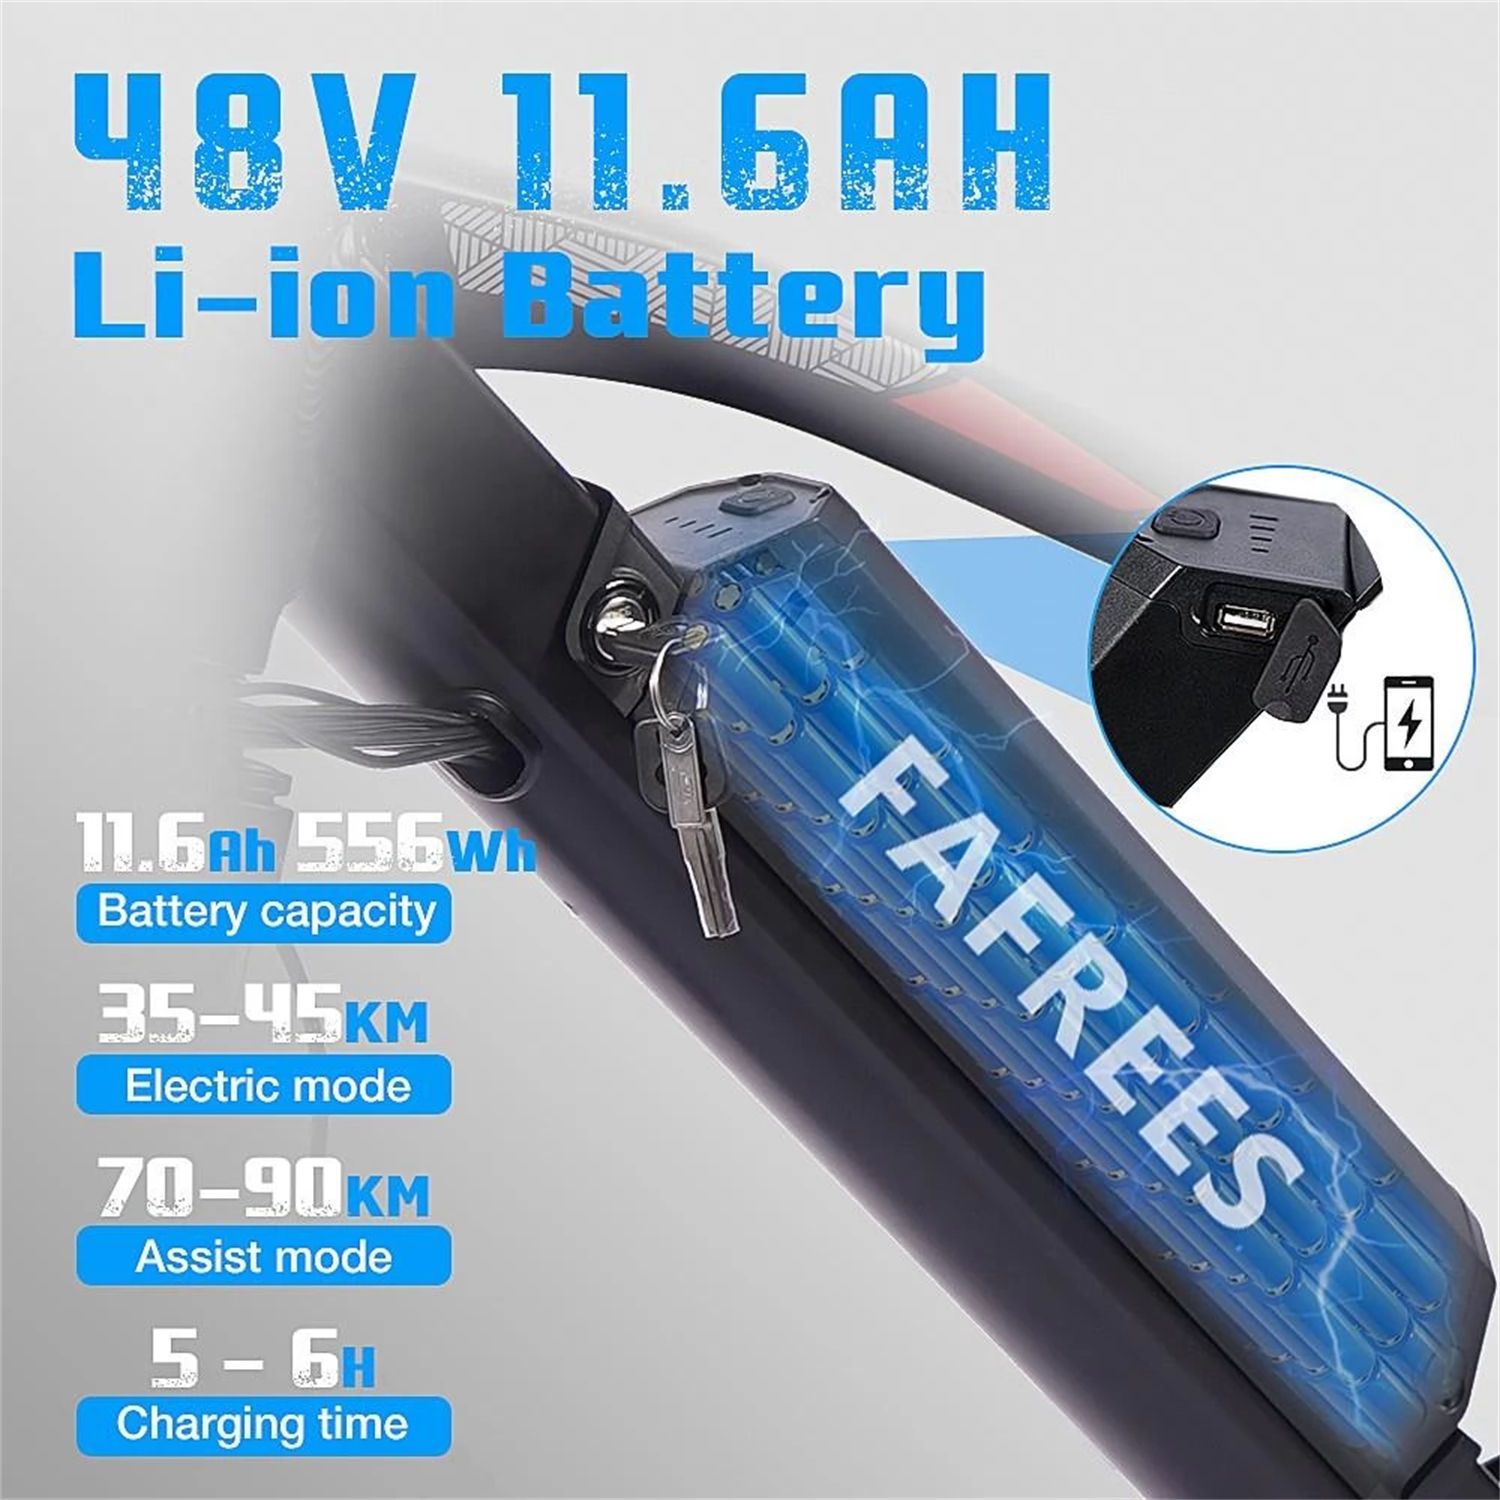 Removable 48v 11.6ah Battery